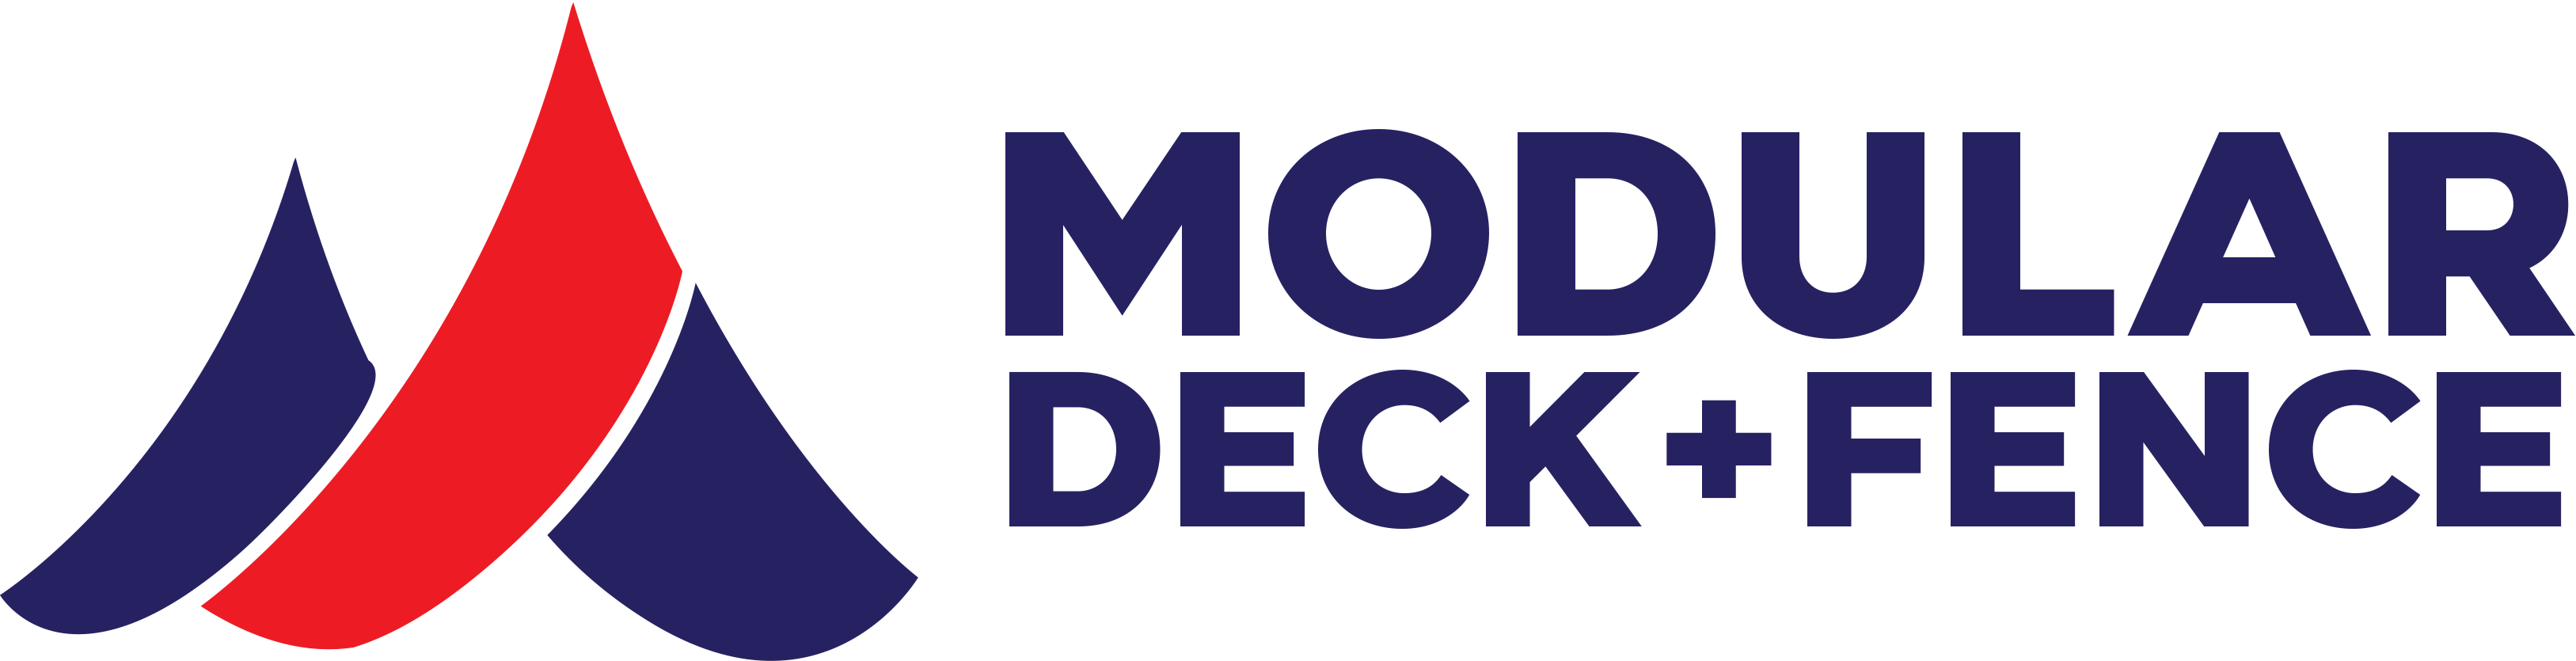 Modular Deck + Fence Logo